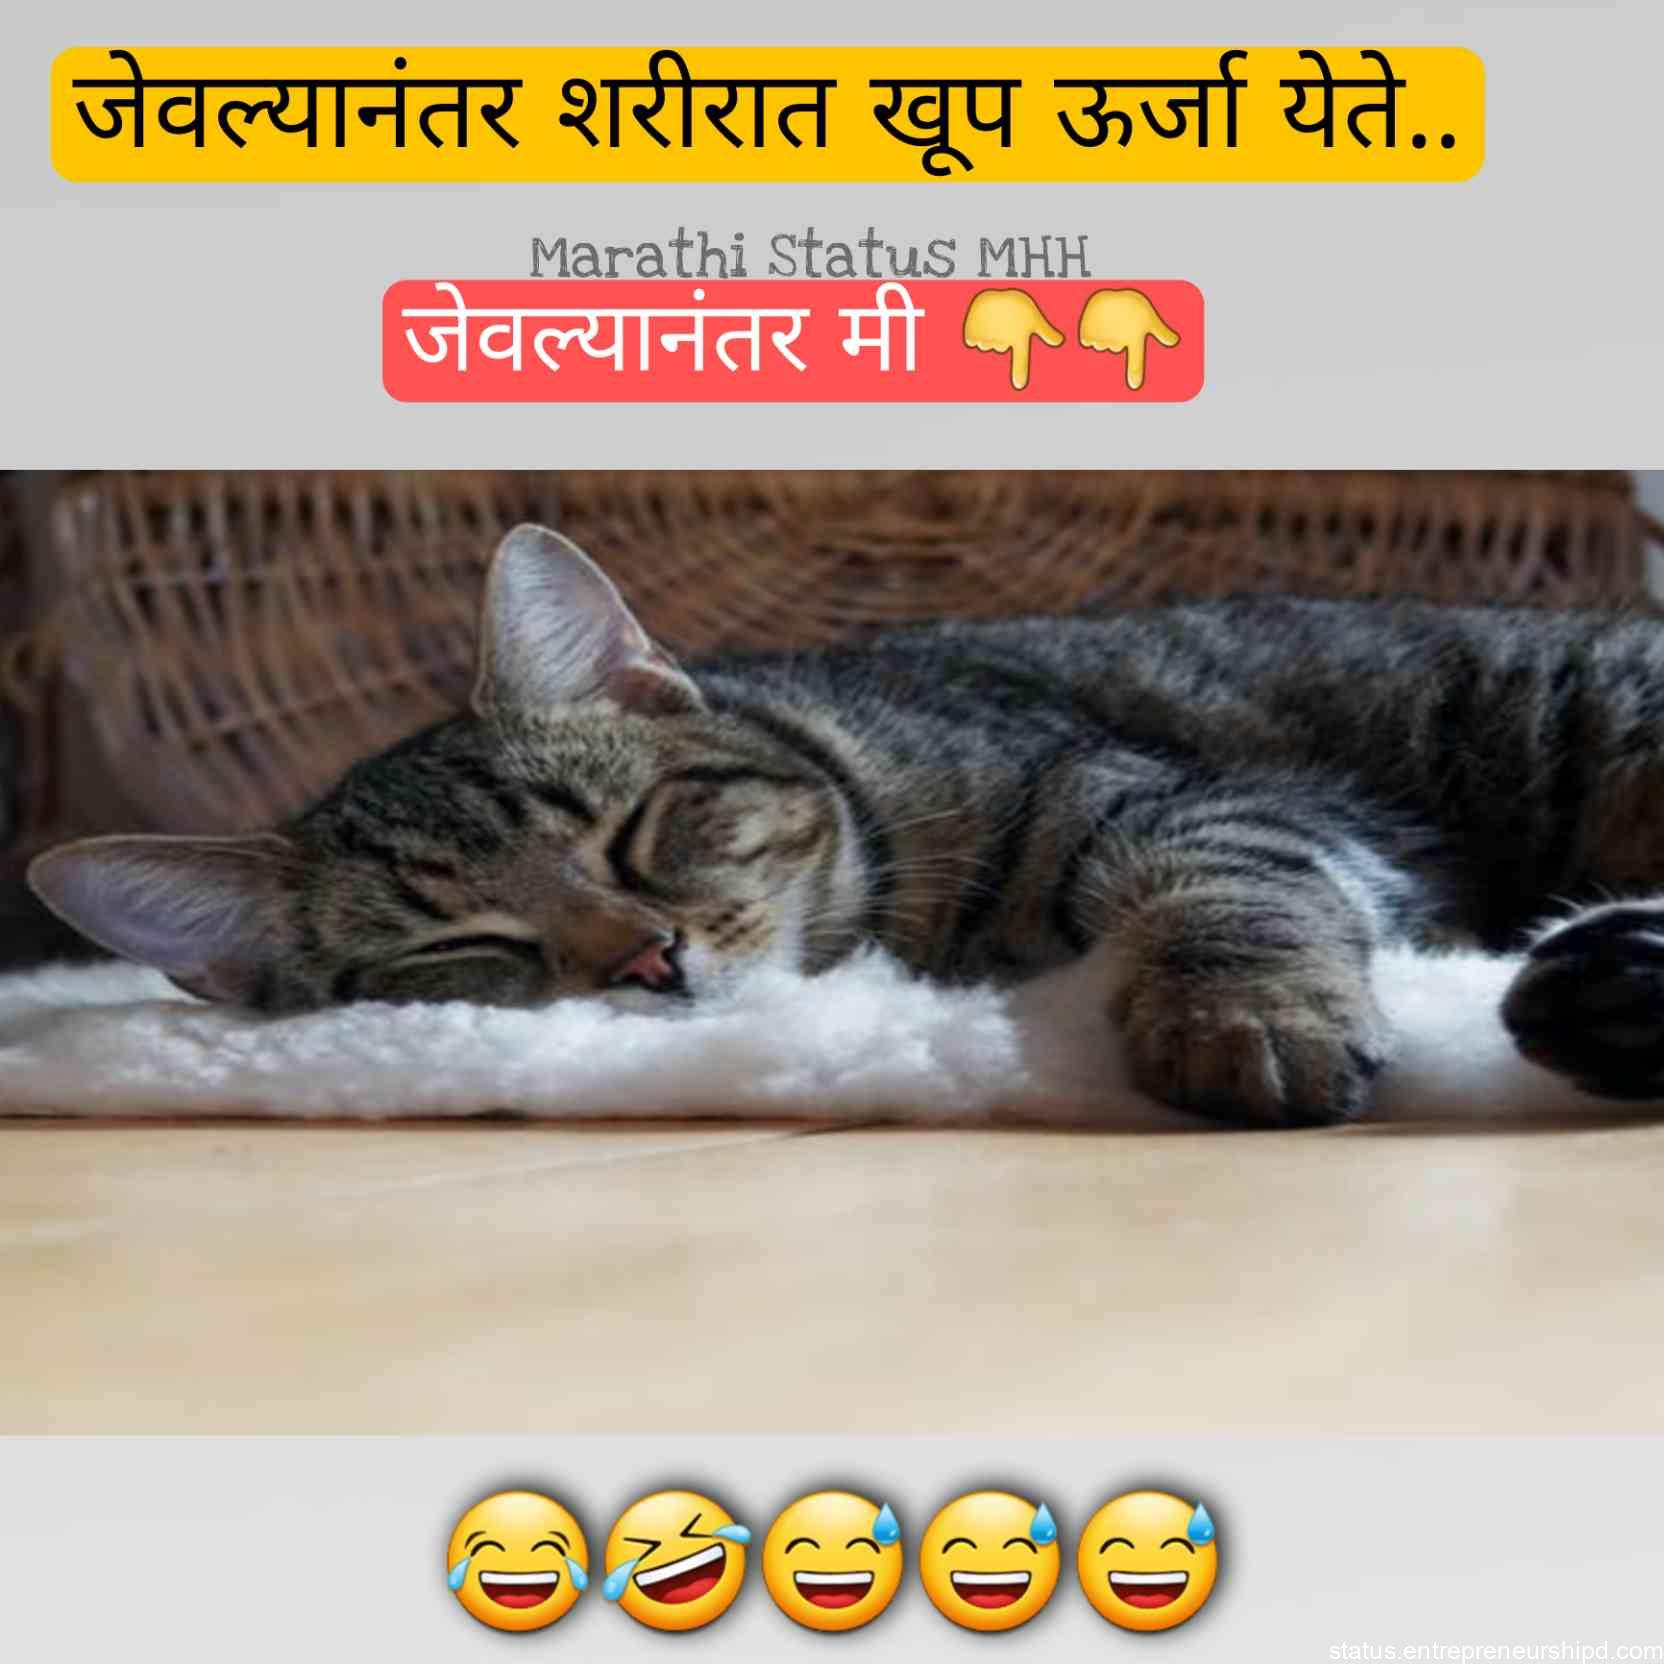 Marathi memes_36 on cat deener